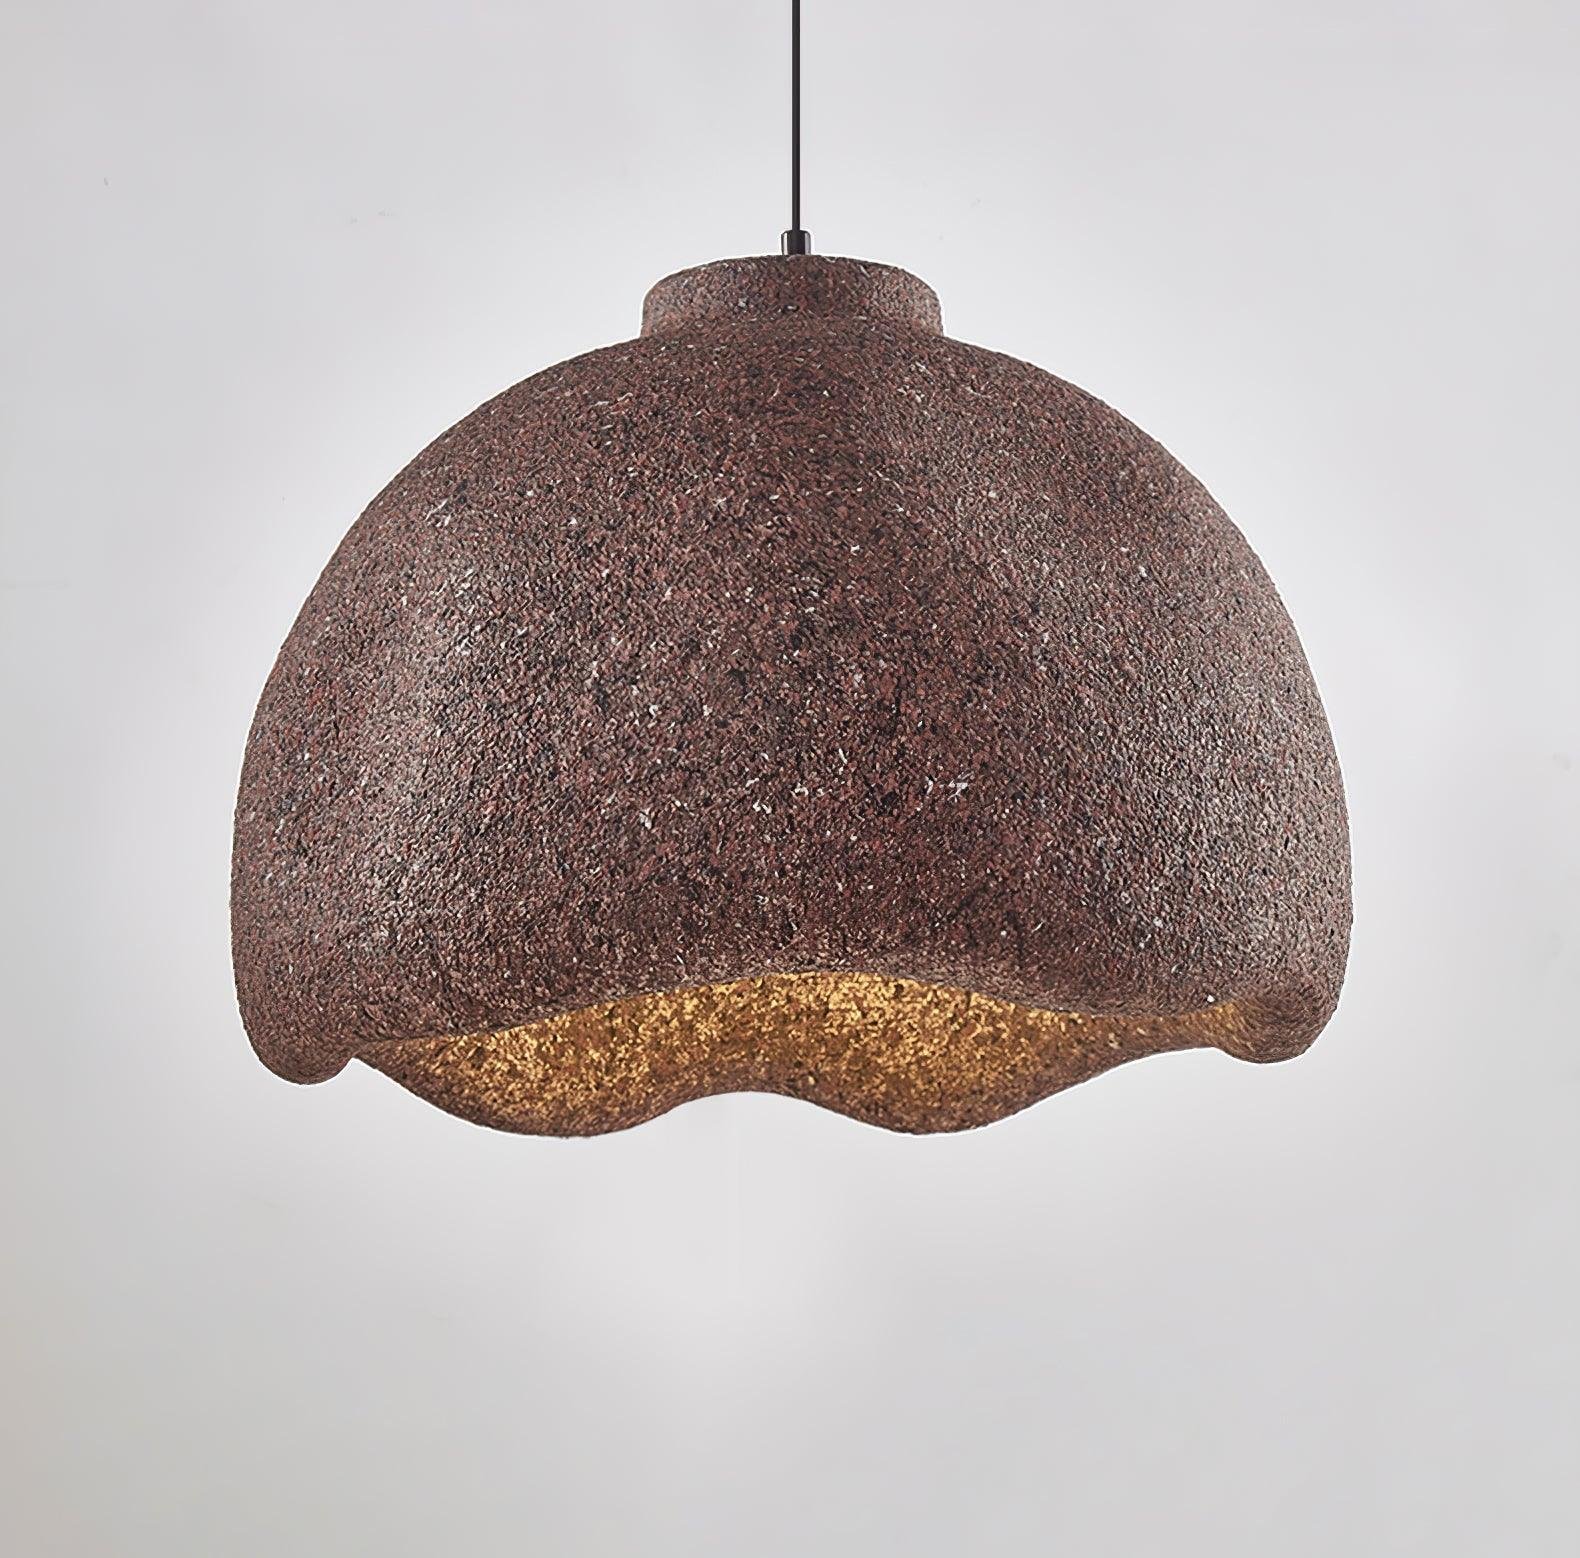 Brown Bells Speckled Pendant Lamp in Diameter 23.6" x Height 17.3" (60cm x 44cm)